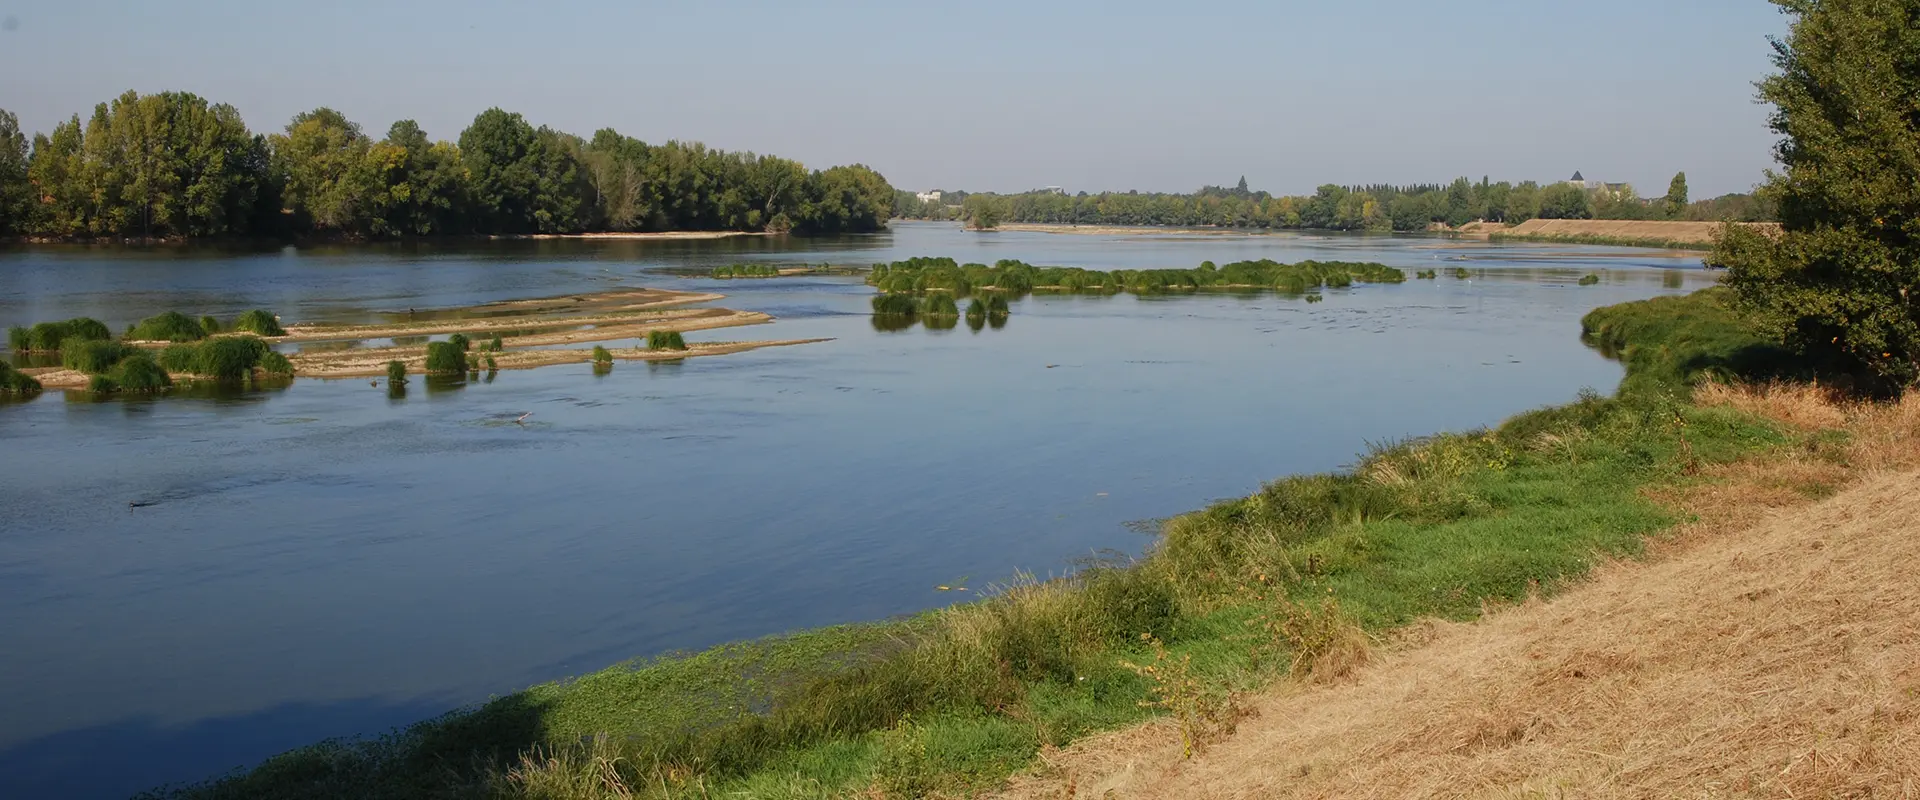 The River Loire near Orléans, Loiret